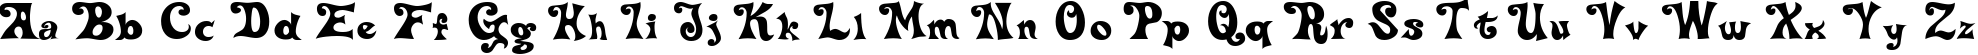 Пример написания английского алфавита шрифтом Delta Hey Max Nine